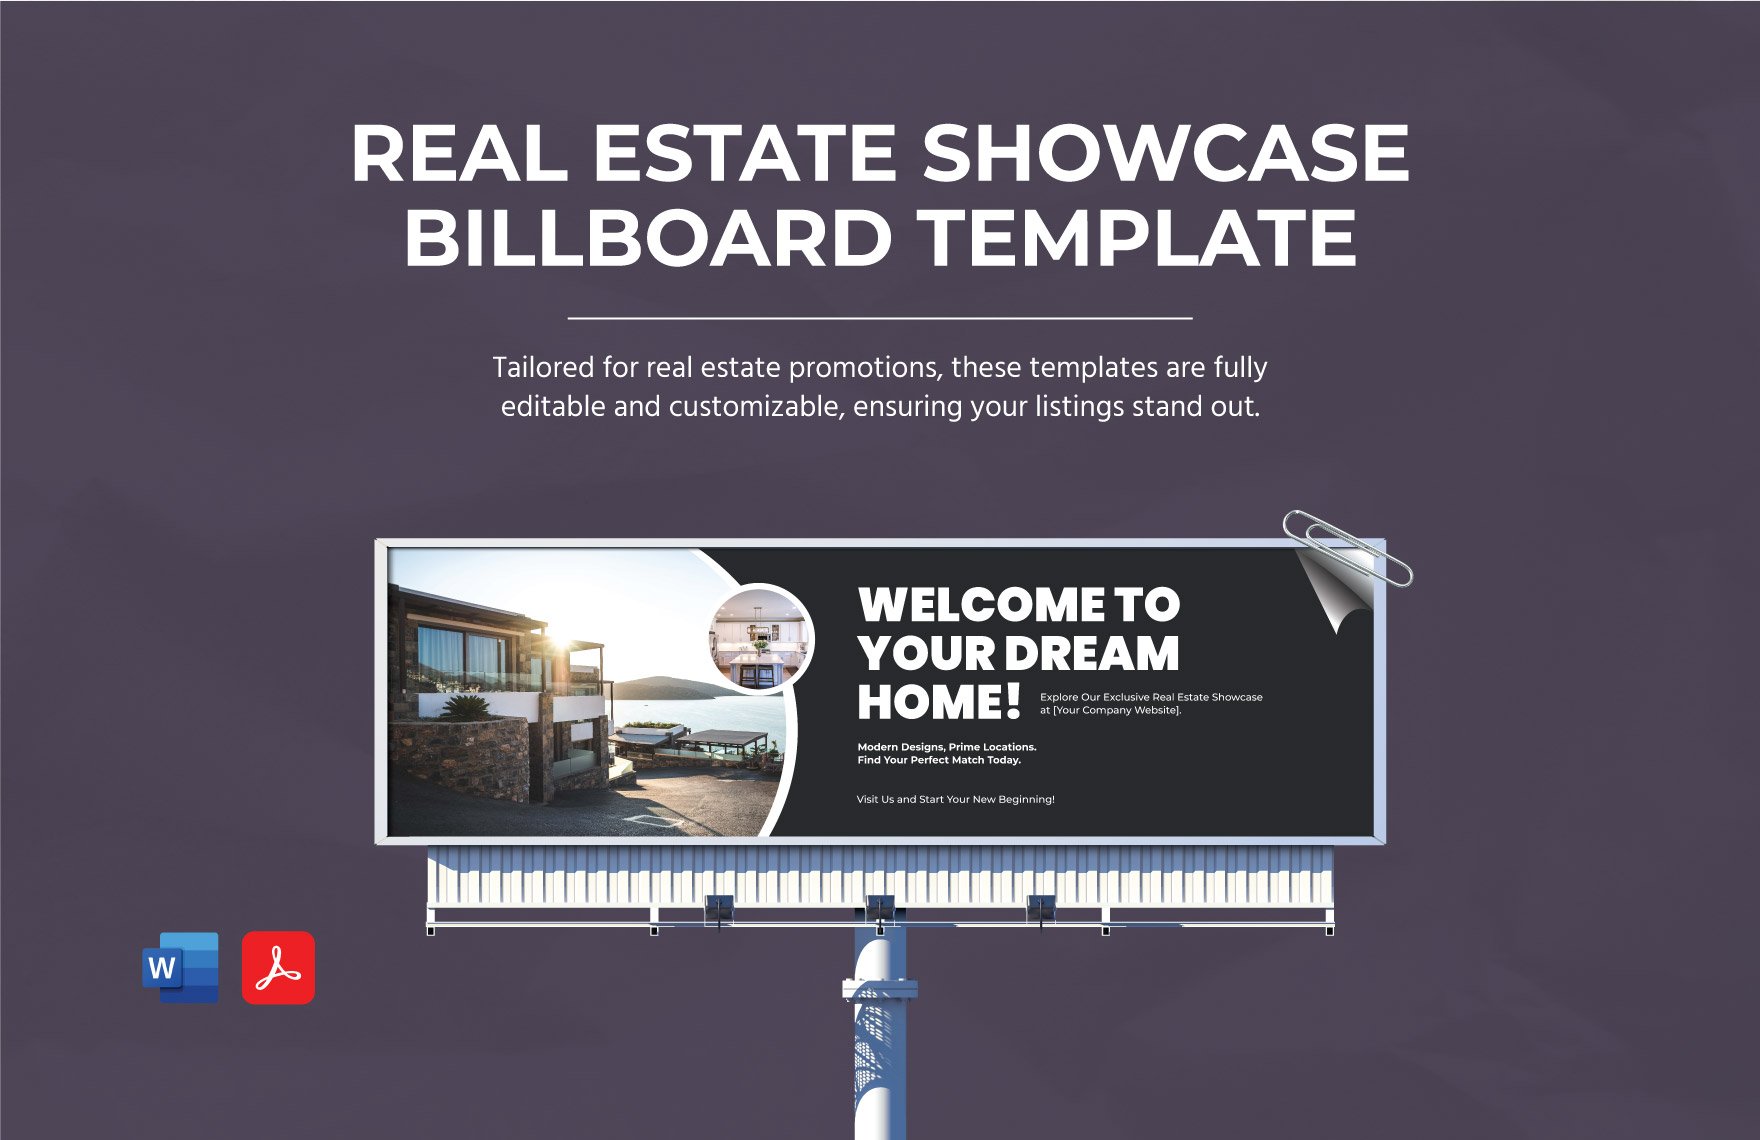 Real Estate Showcase Billboard Template